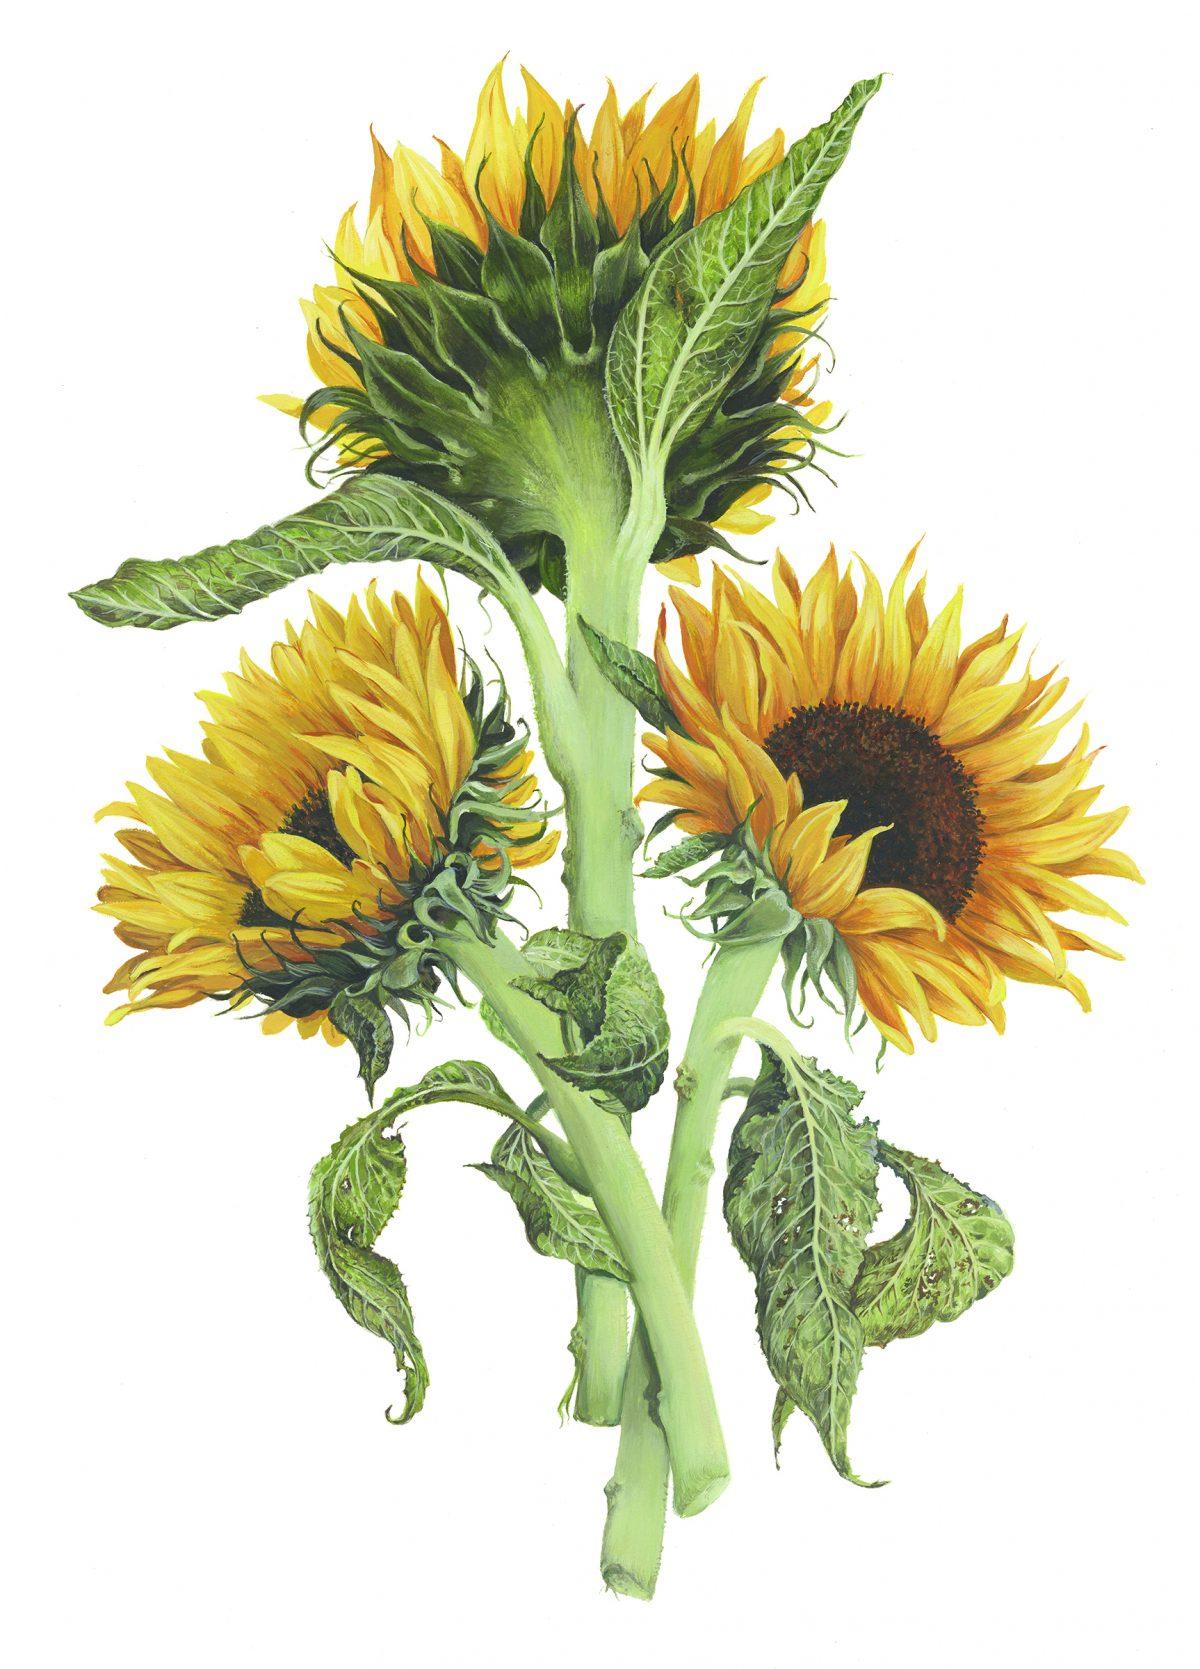 “Three Sunflowers (Helianthus annuus),” 2016, by Jeannetta van Raalte. Watercolor and gouache on paper. (Jeannetta van Raalte)